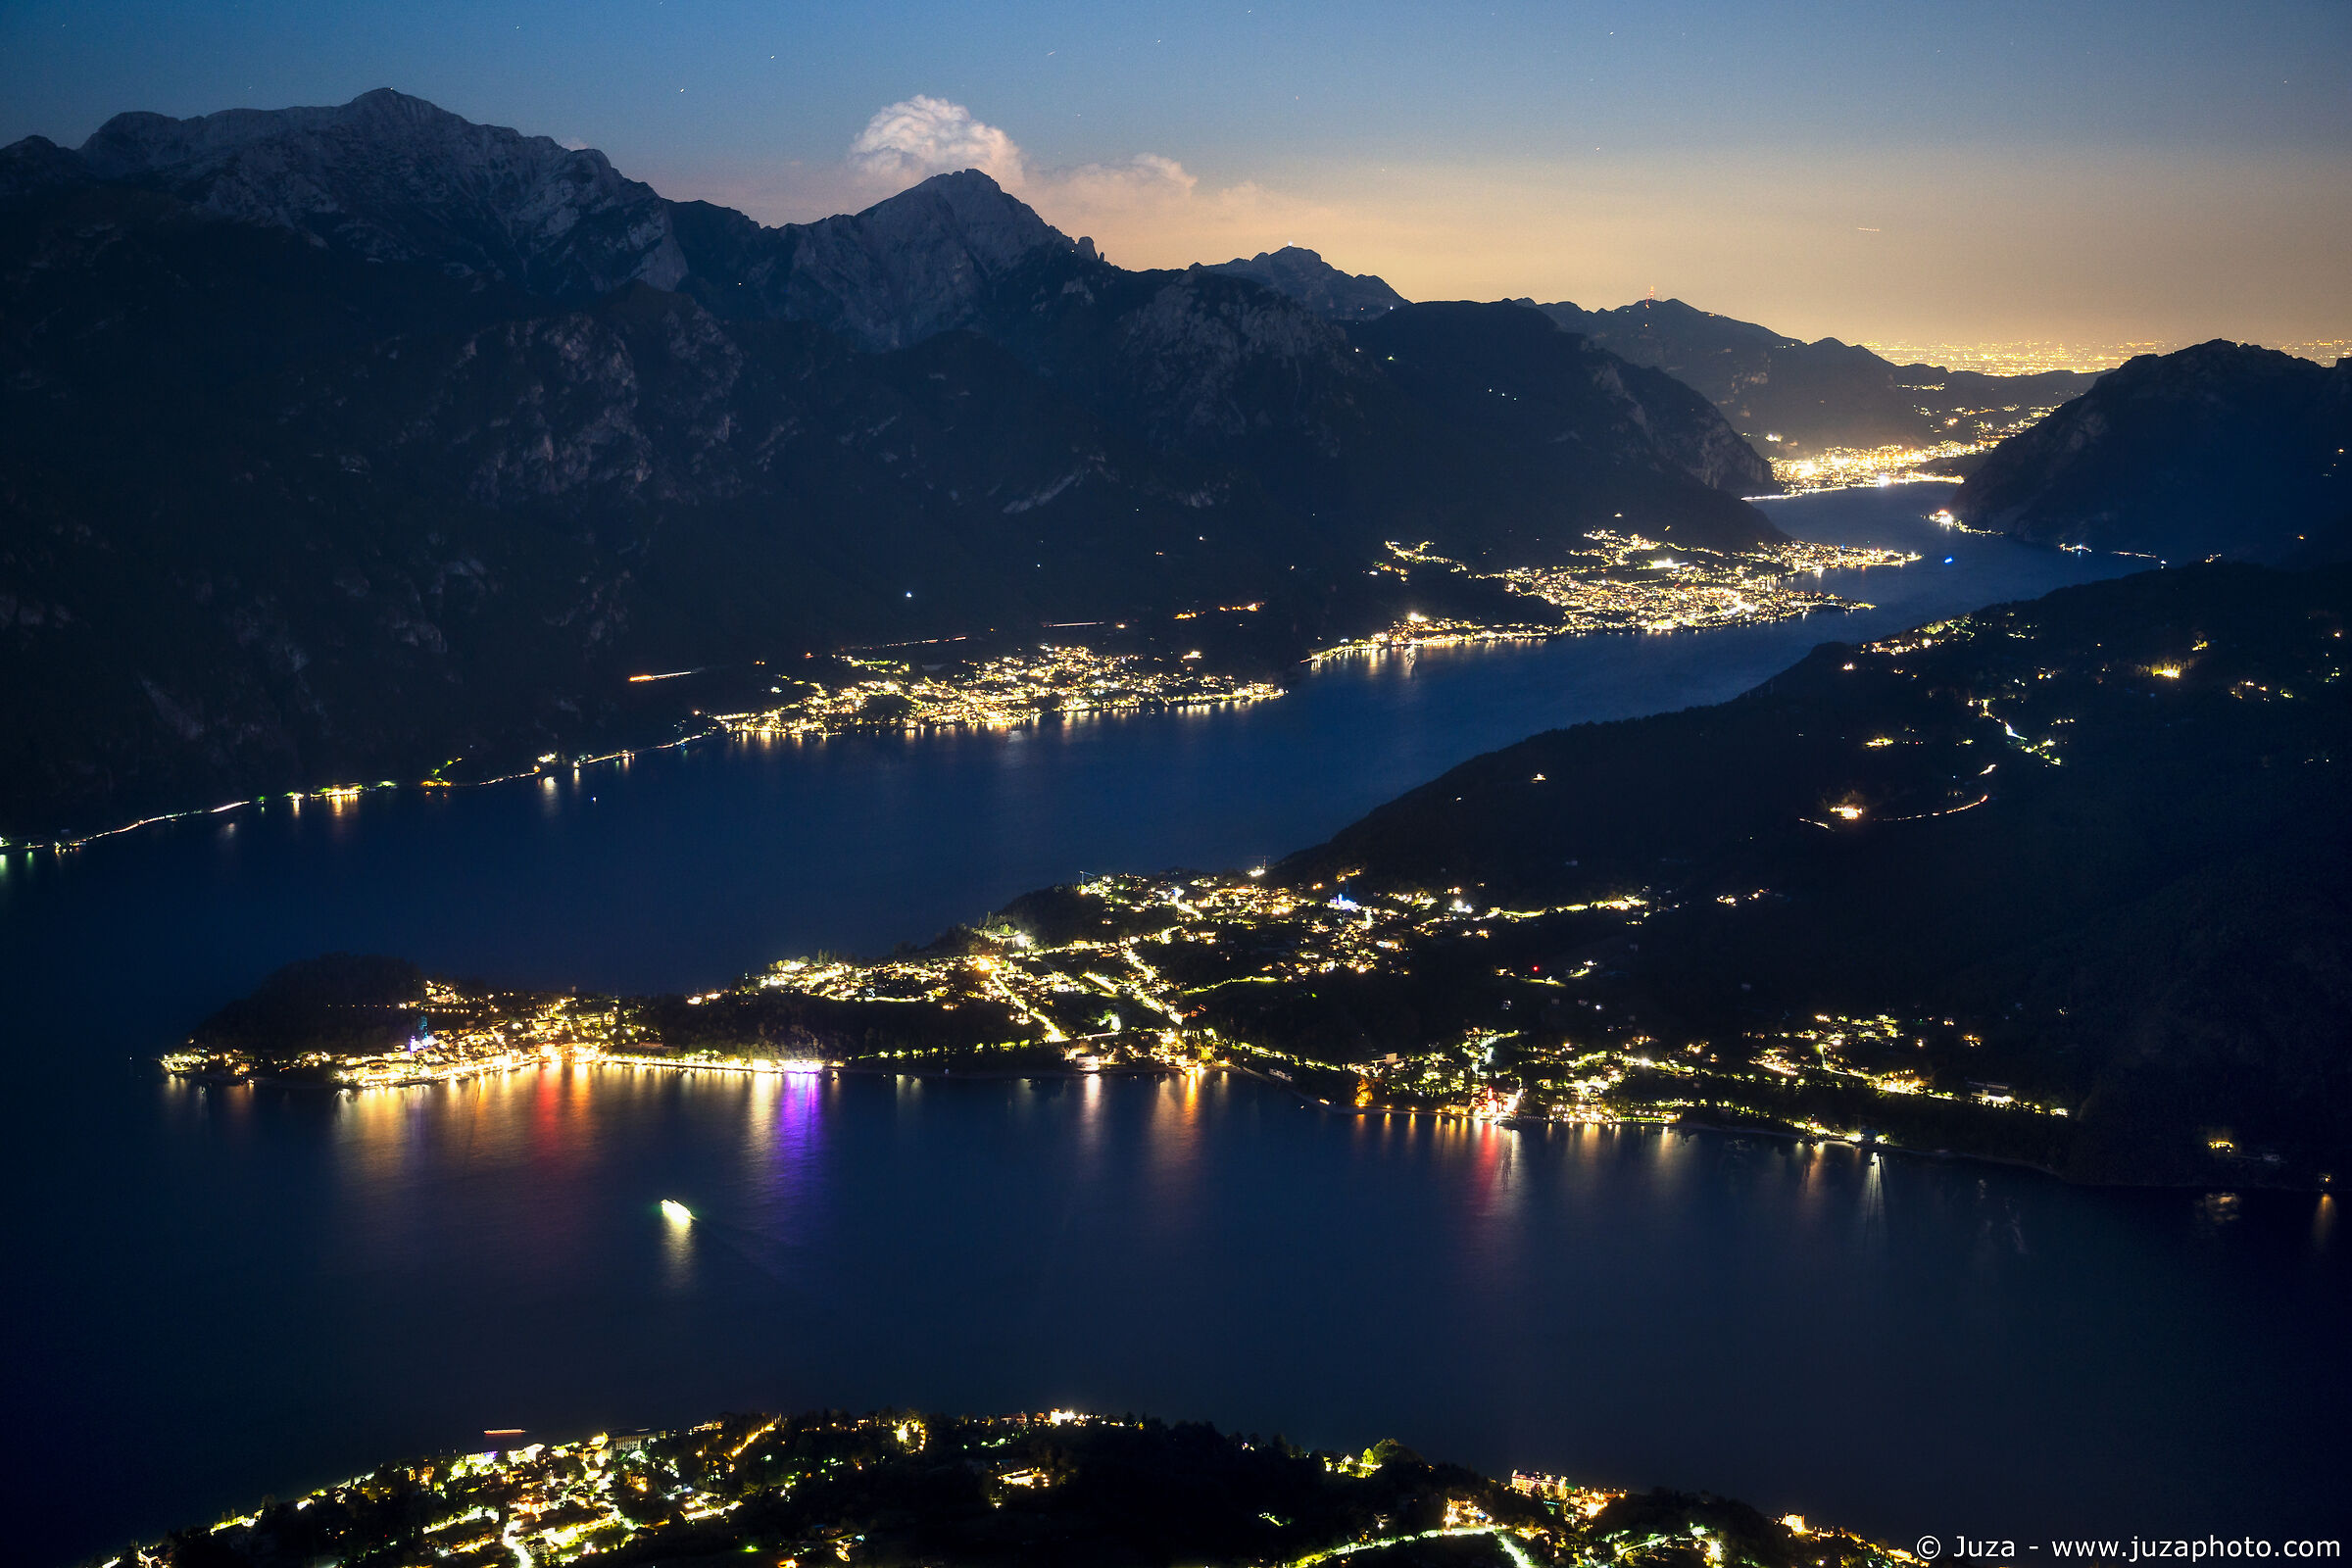 The night on Lake Como...